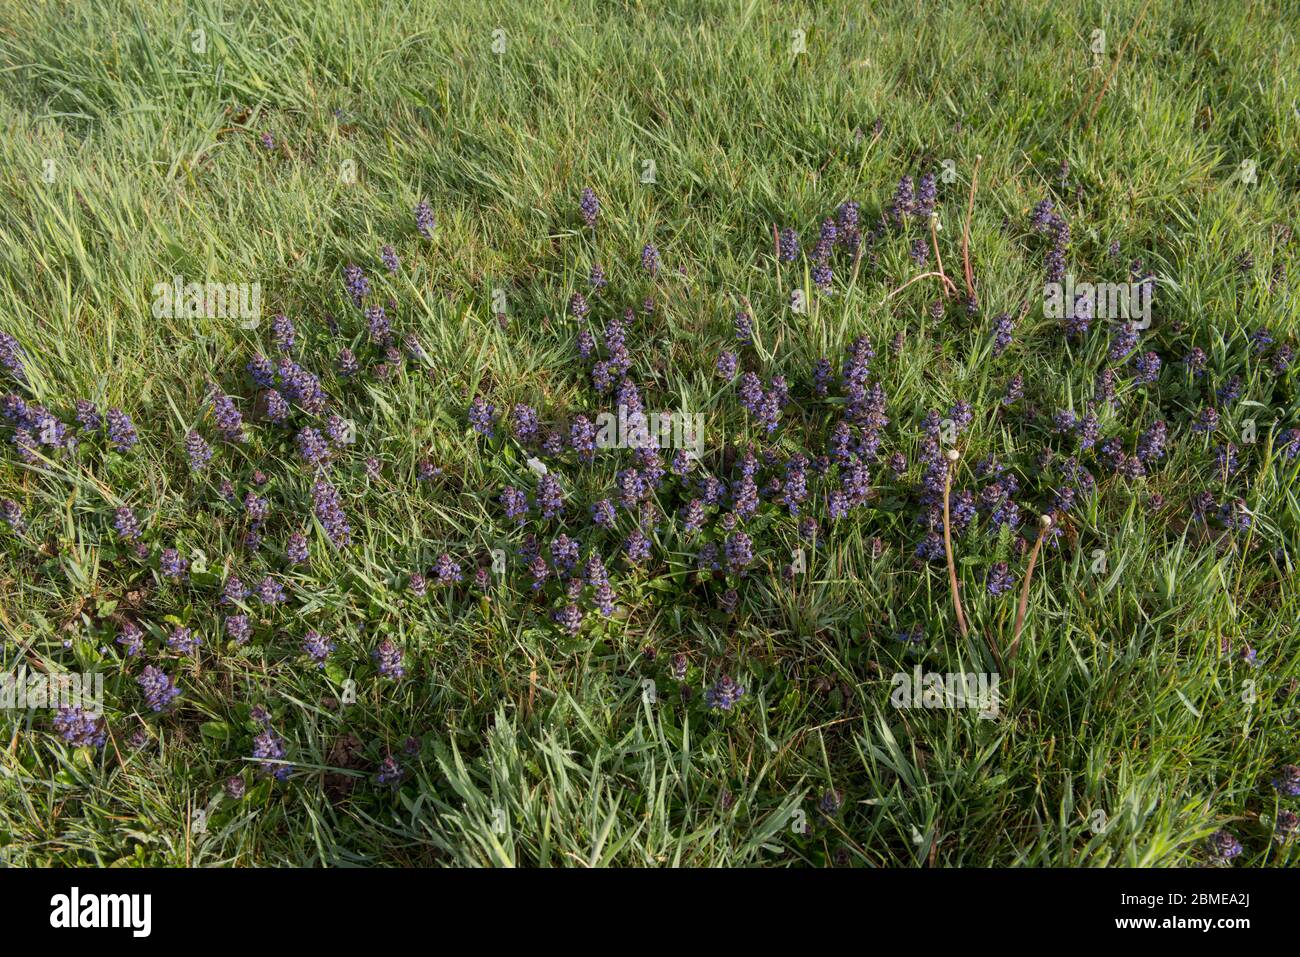 Spring Flowering Perennial Purple Common Bugle Herb Wild Flower (Ajuga reptans) Growing in Grassland in Rural Devon, England, UK Stock Photo